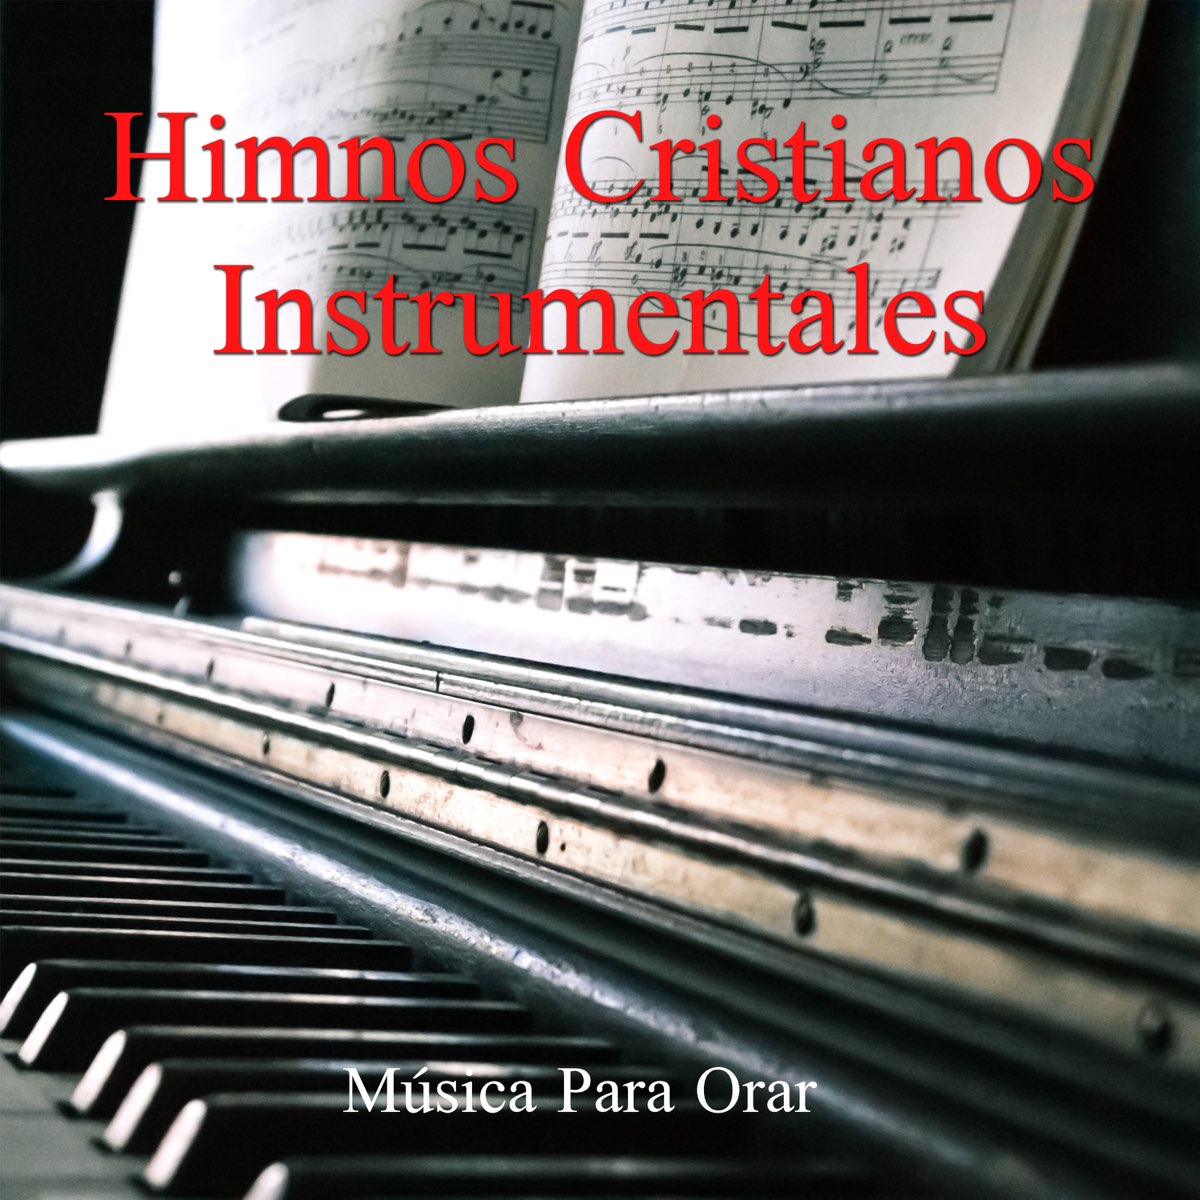 Himnos cristianos (Instrumental) by musica para orar on Apple Music